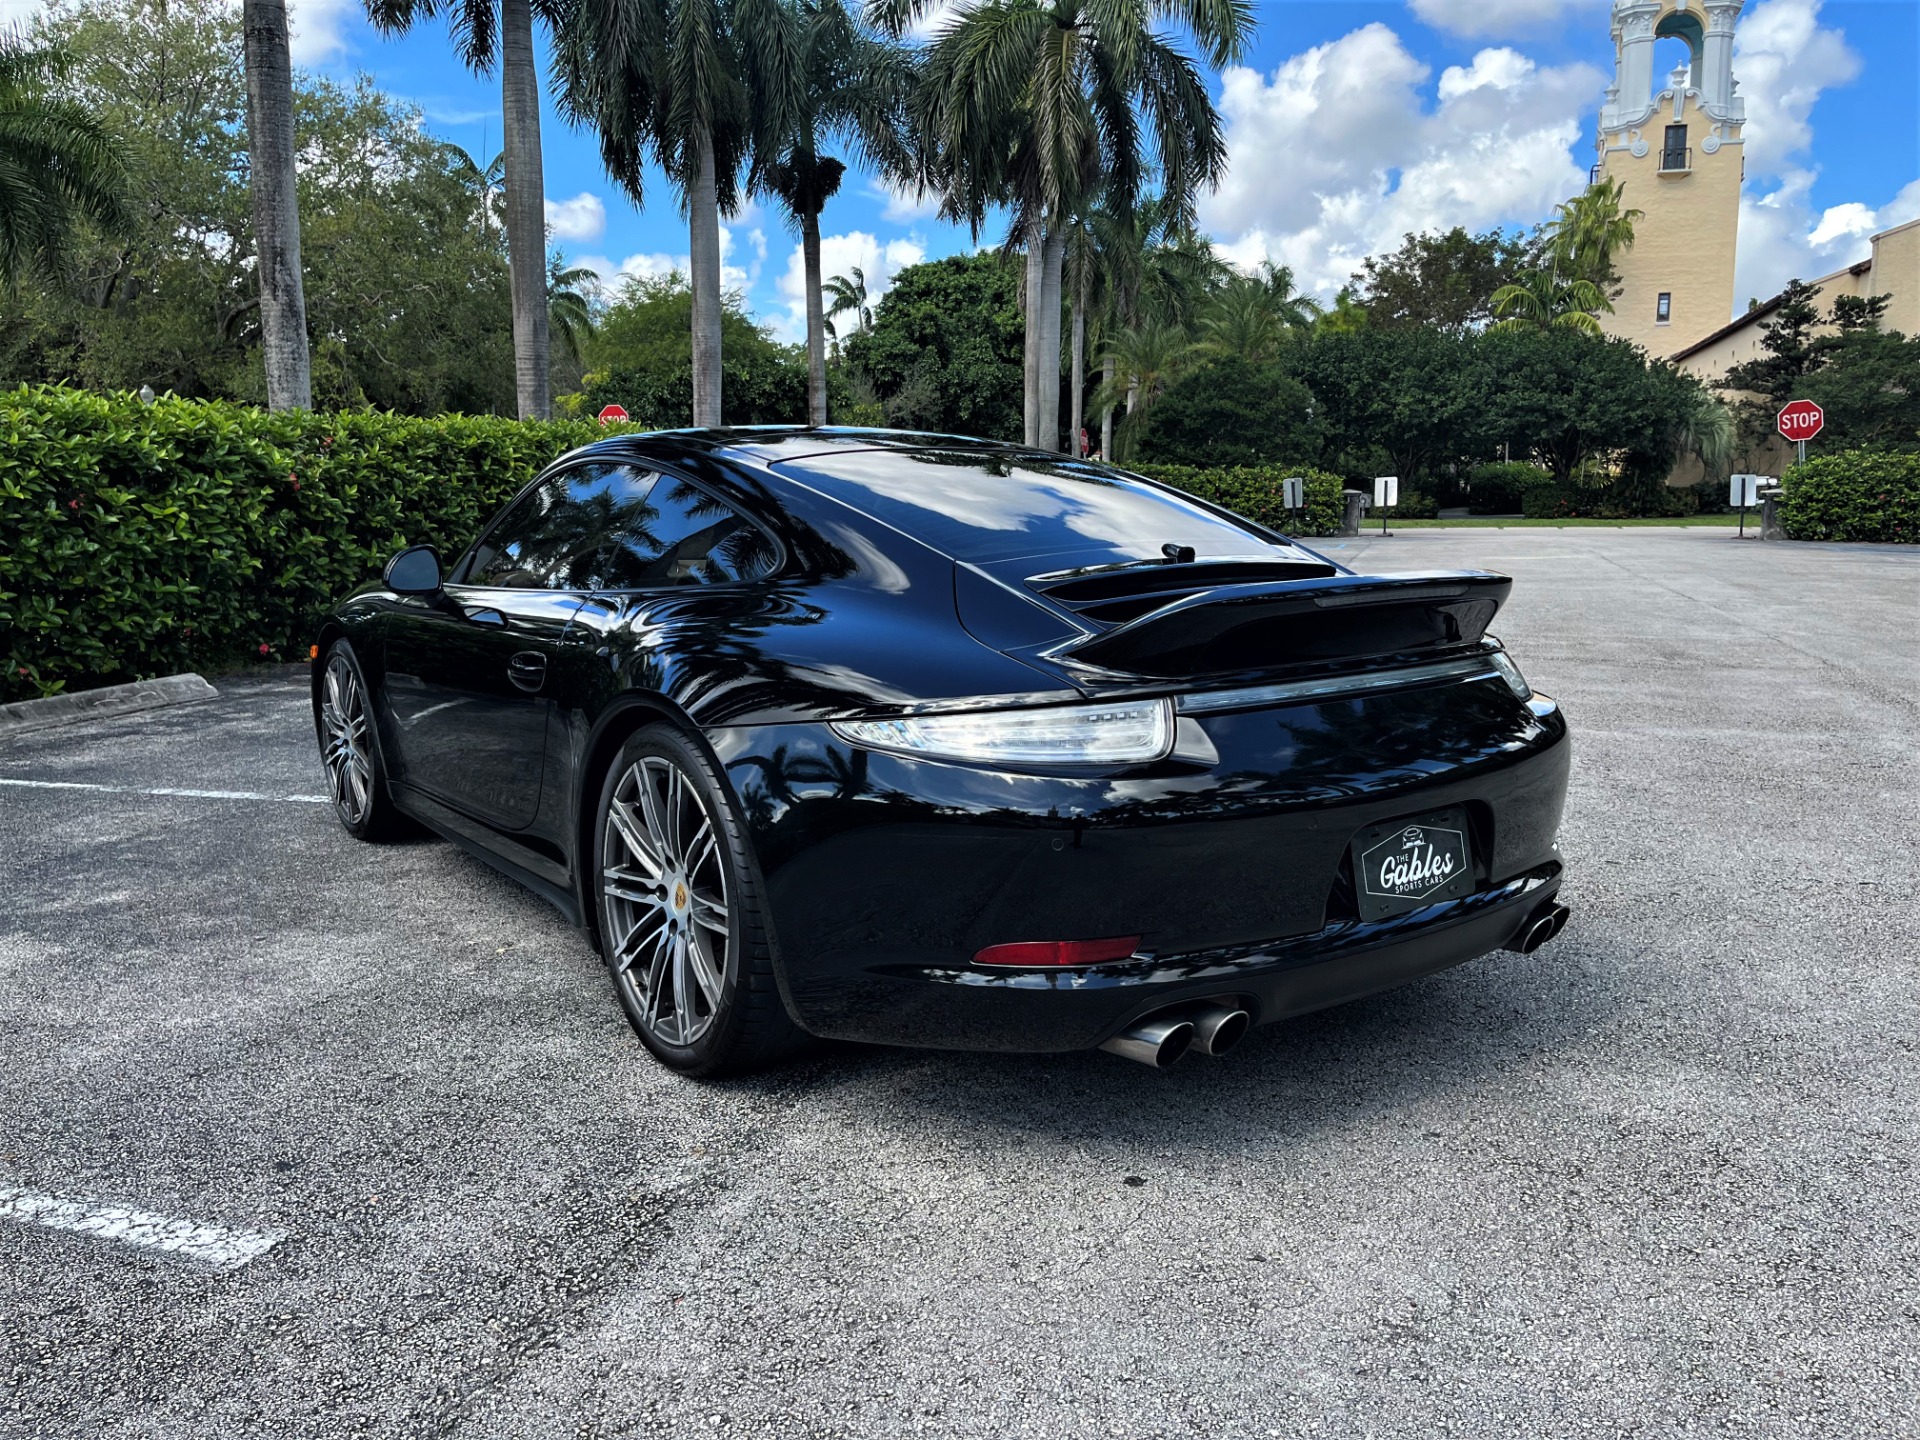 Used 2015 Porsche 911 Carrera 4S for sale $89,850 at The Gables Sports Cars in Miami FL 33146 2